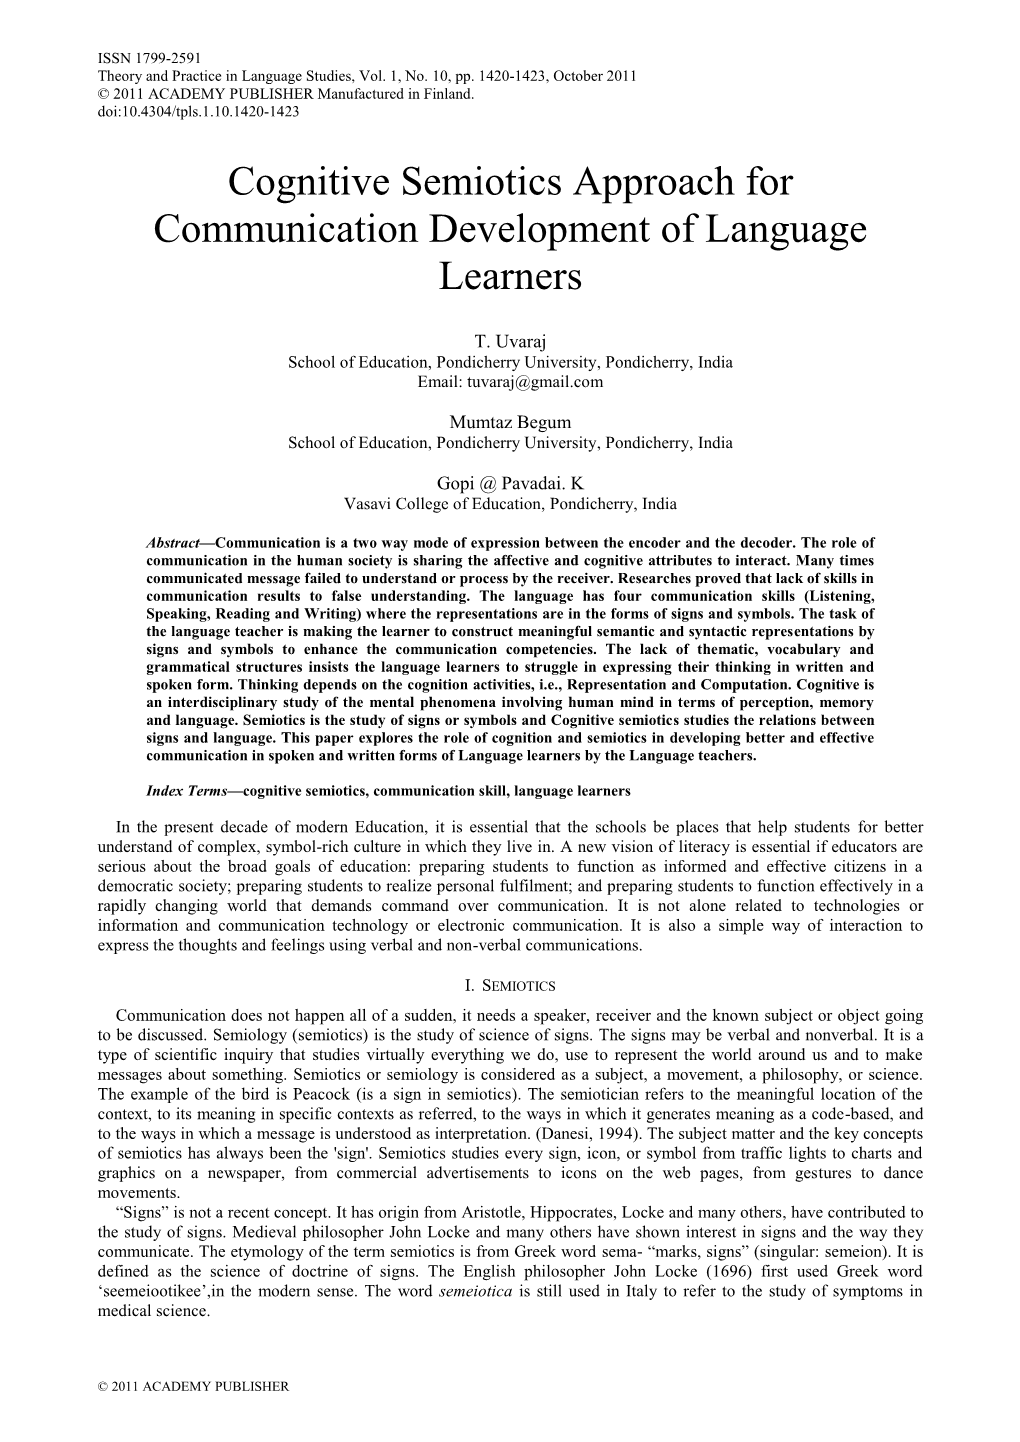 Cognitive Semiotics Approach for Communication Development of Language Learners